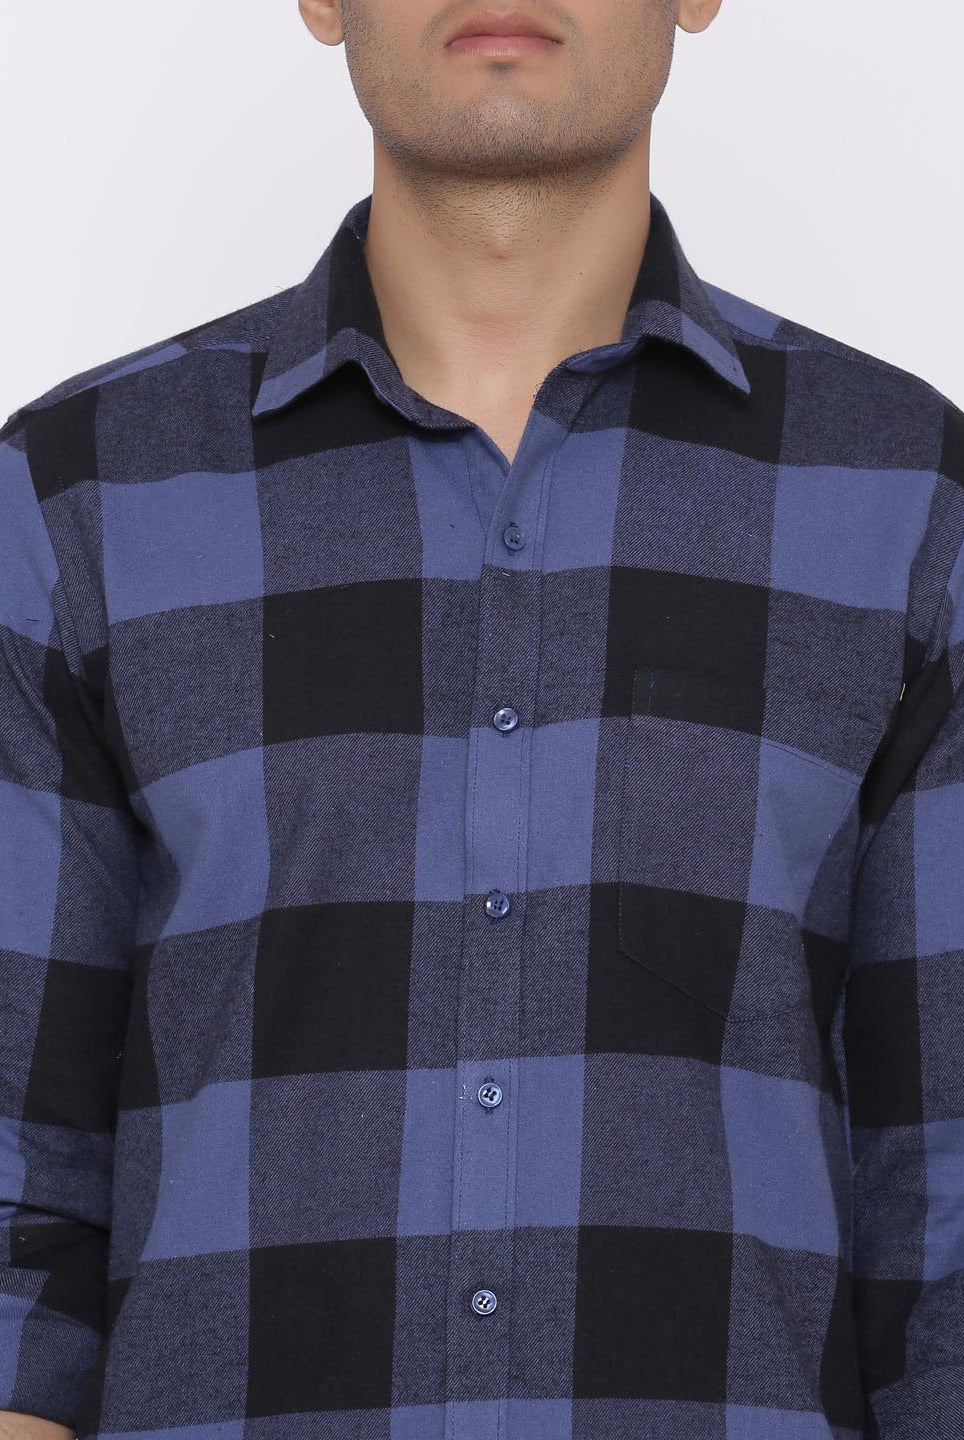 blue flannel check shirt